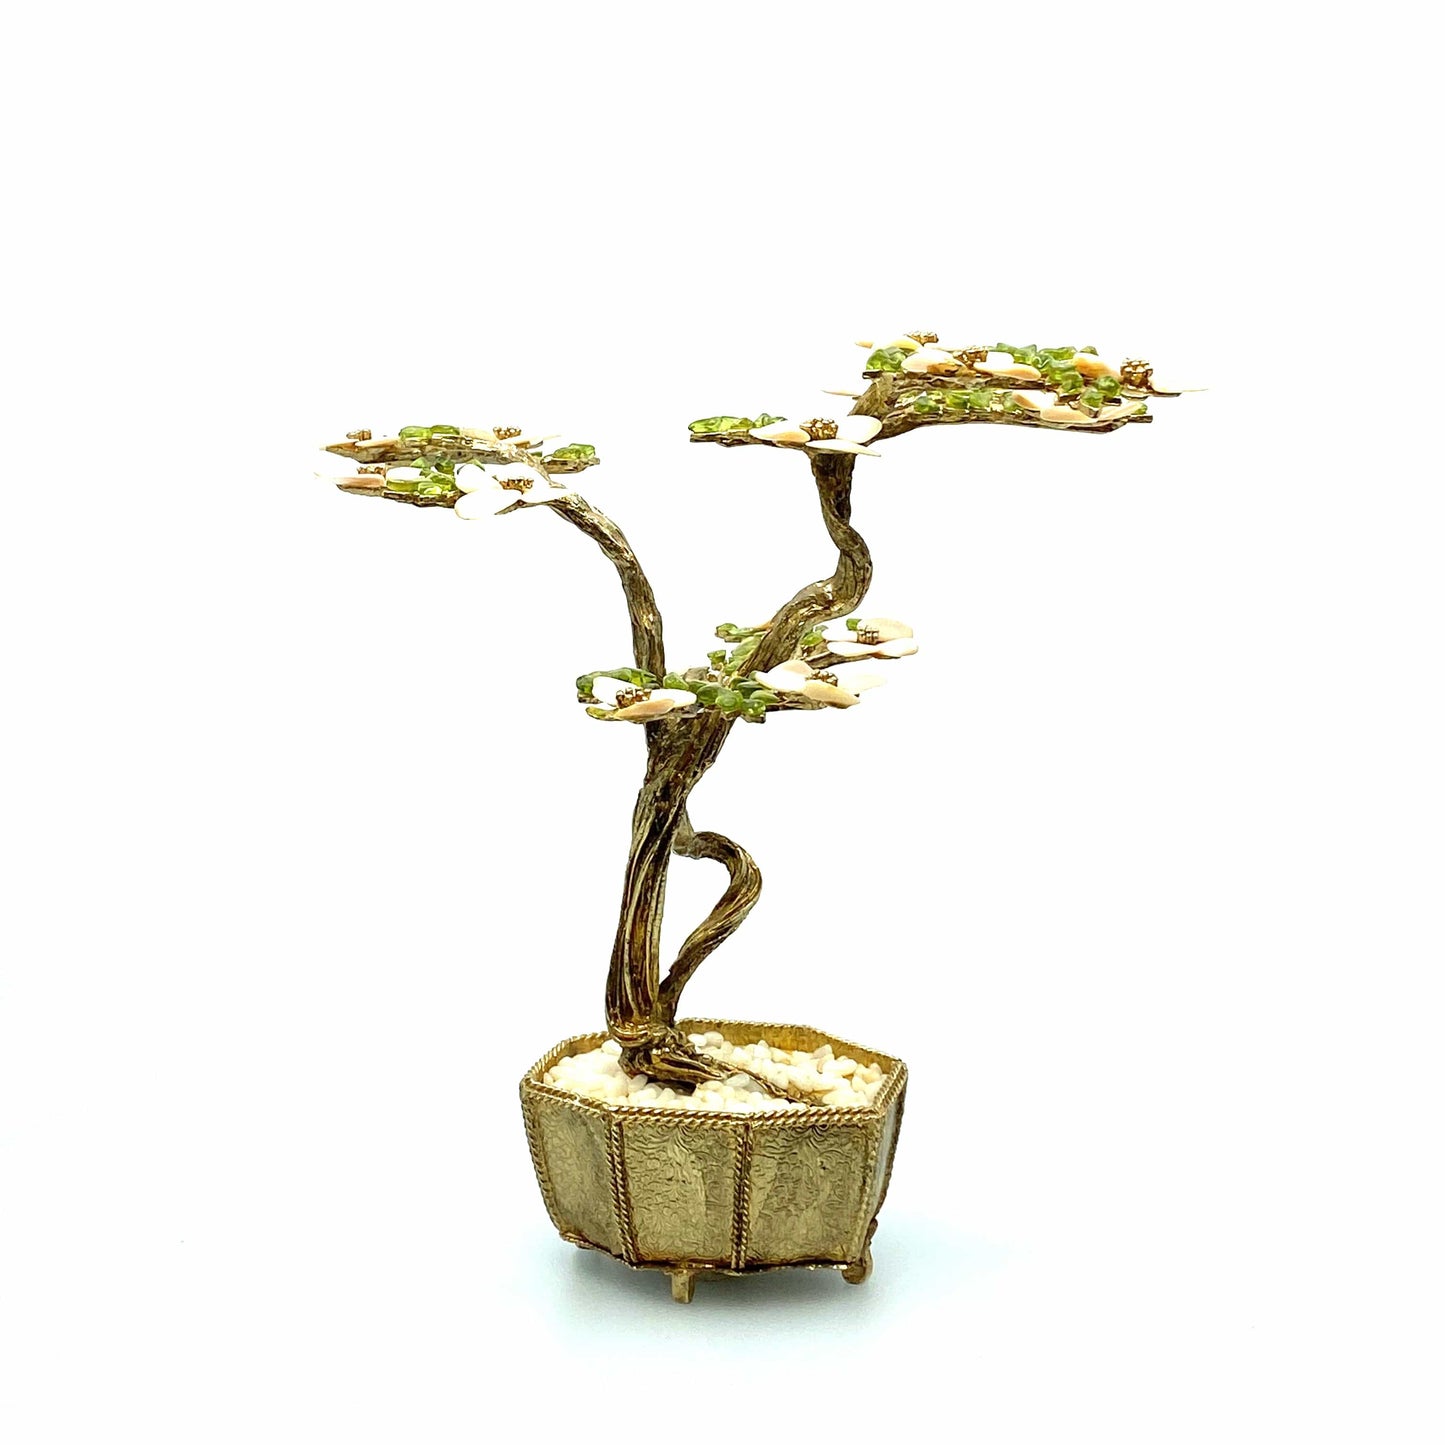 Vintage Brass Bonsai Tree Sculpture with Jade - 1970s